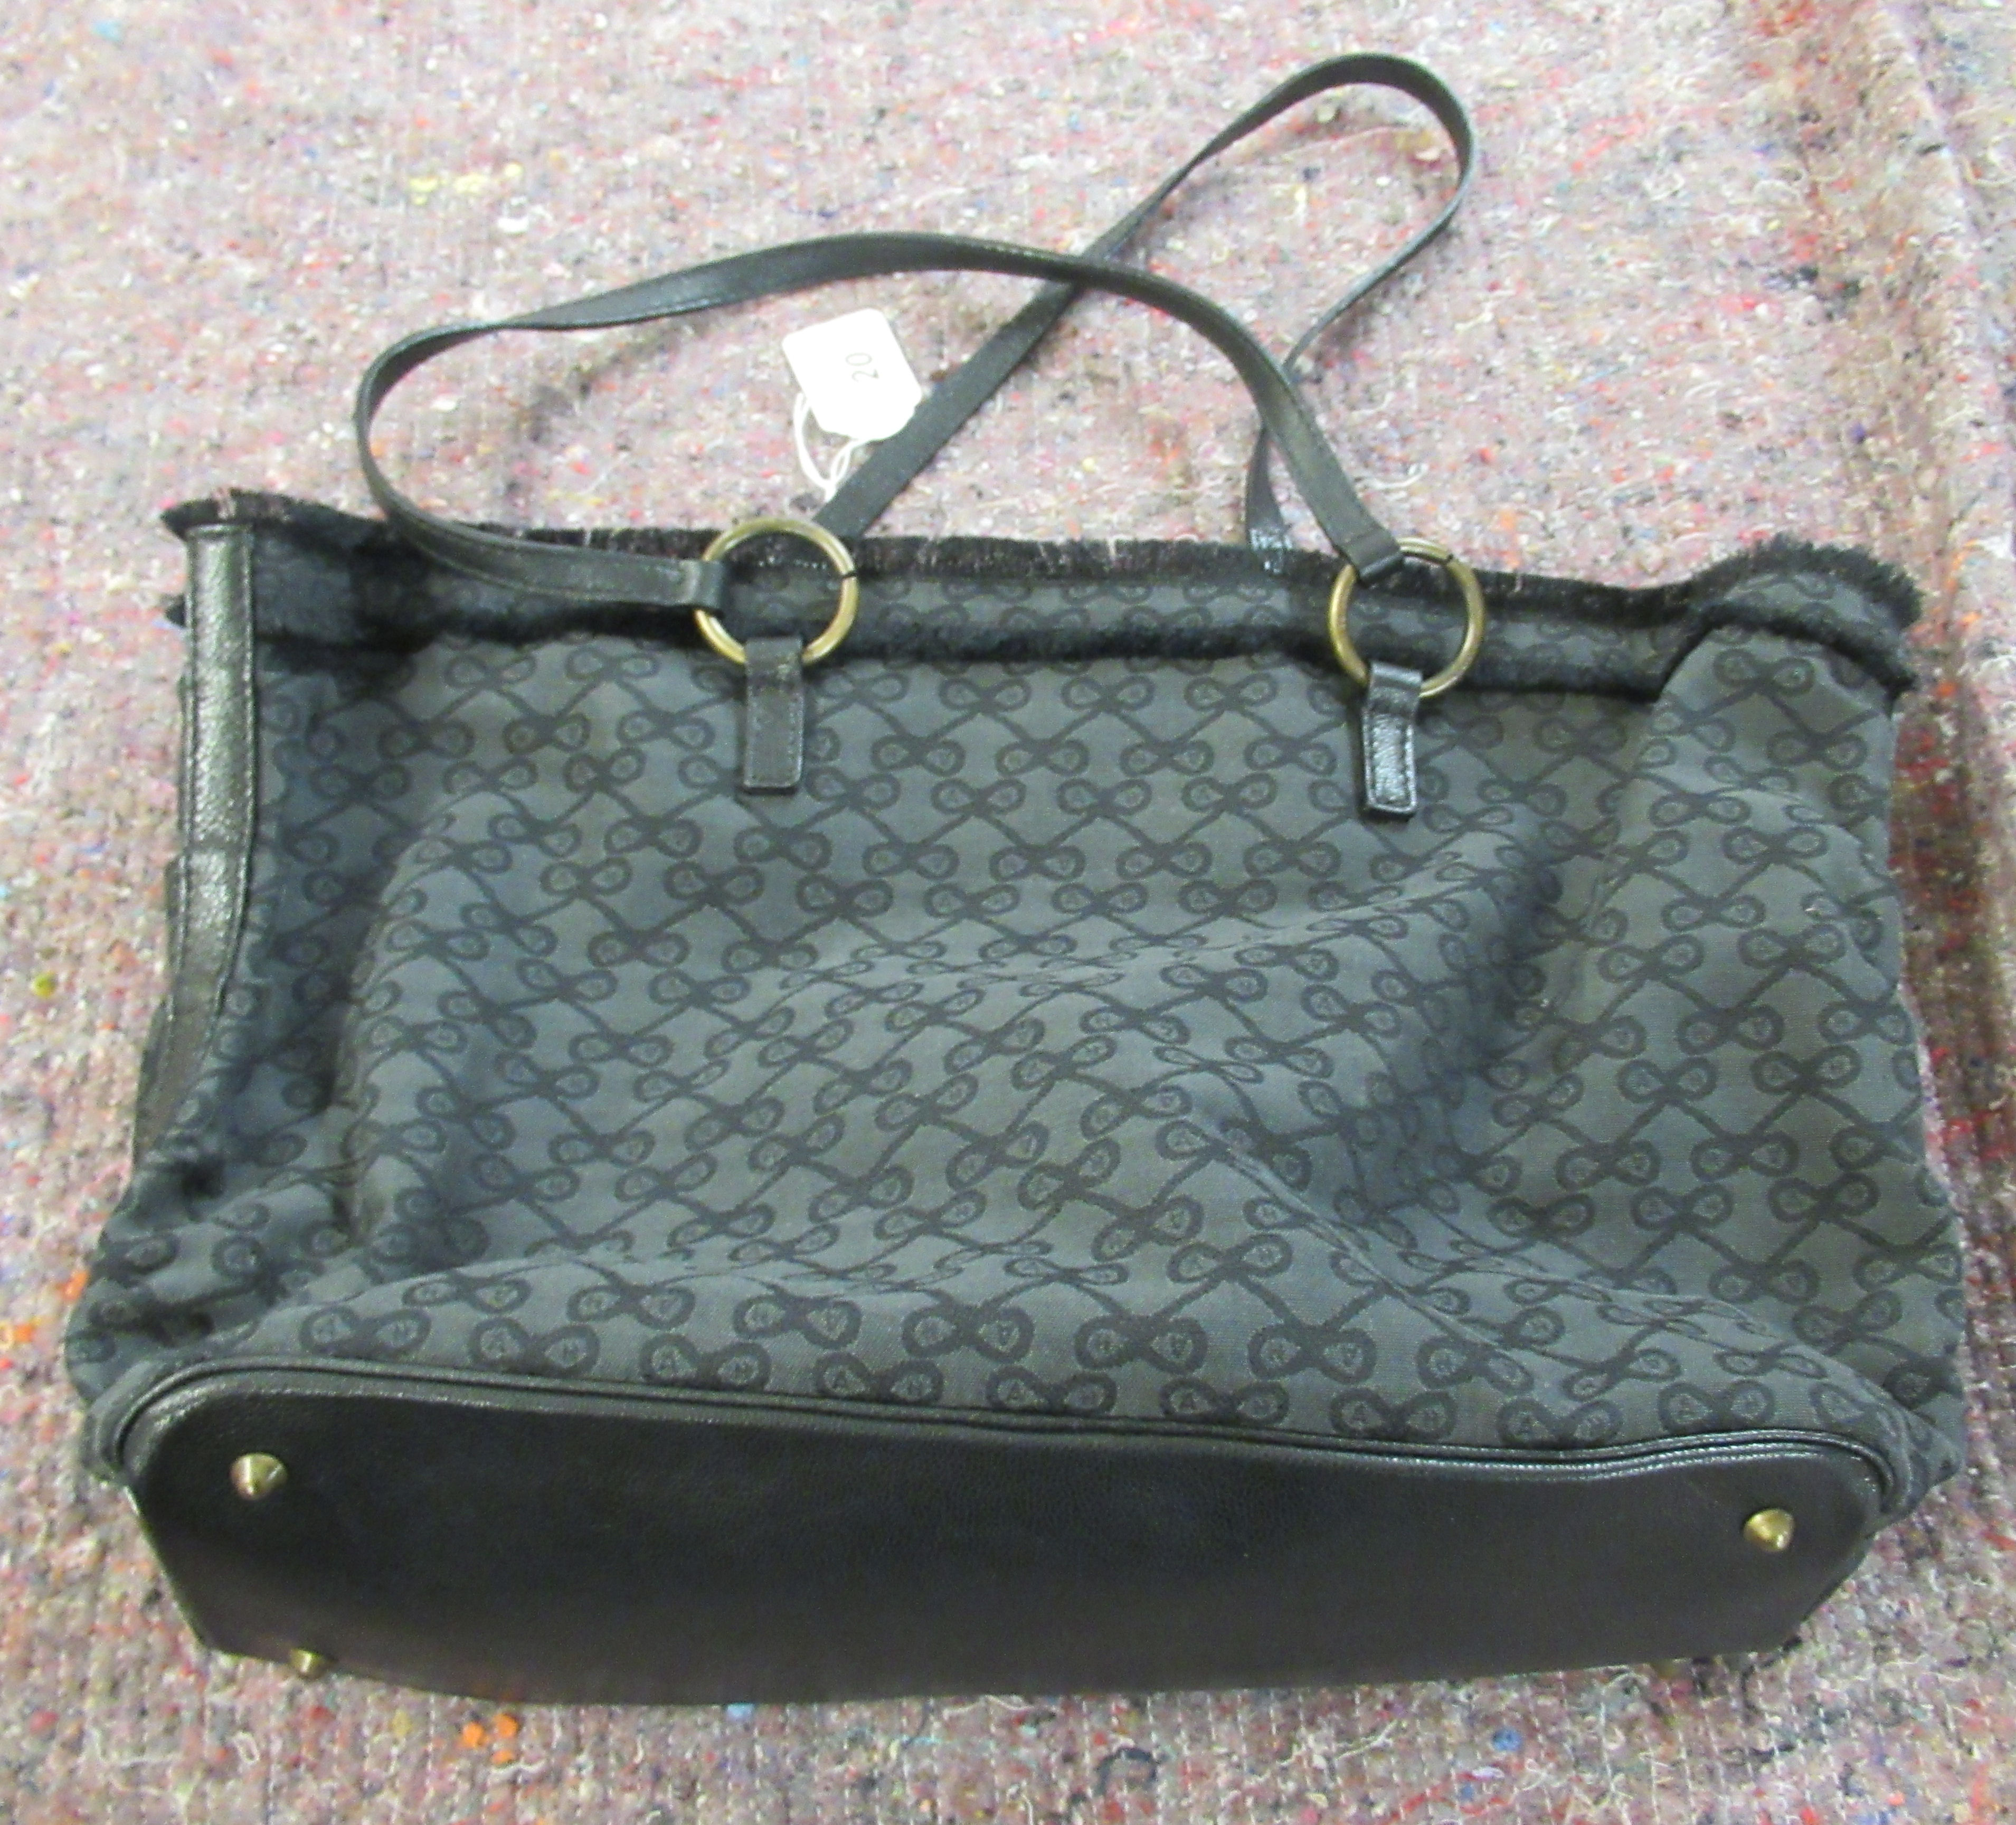 An Anya Hindmarch textured black fabric tote bag OS5 - Image 2 of 3